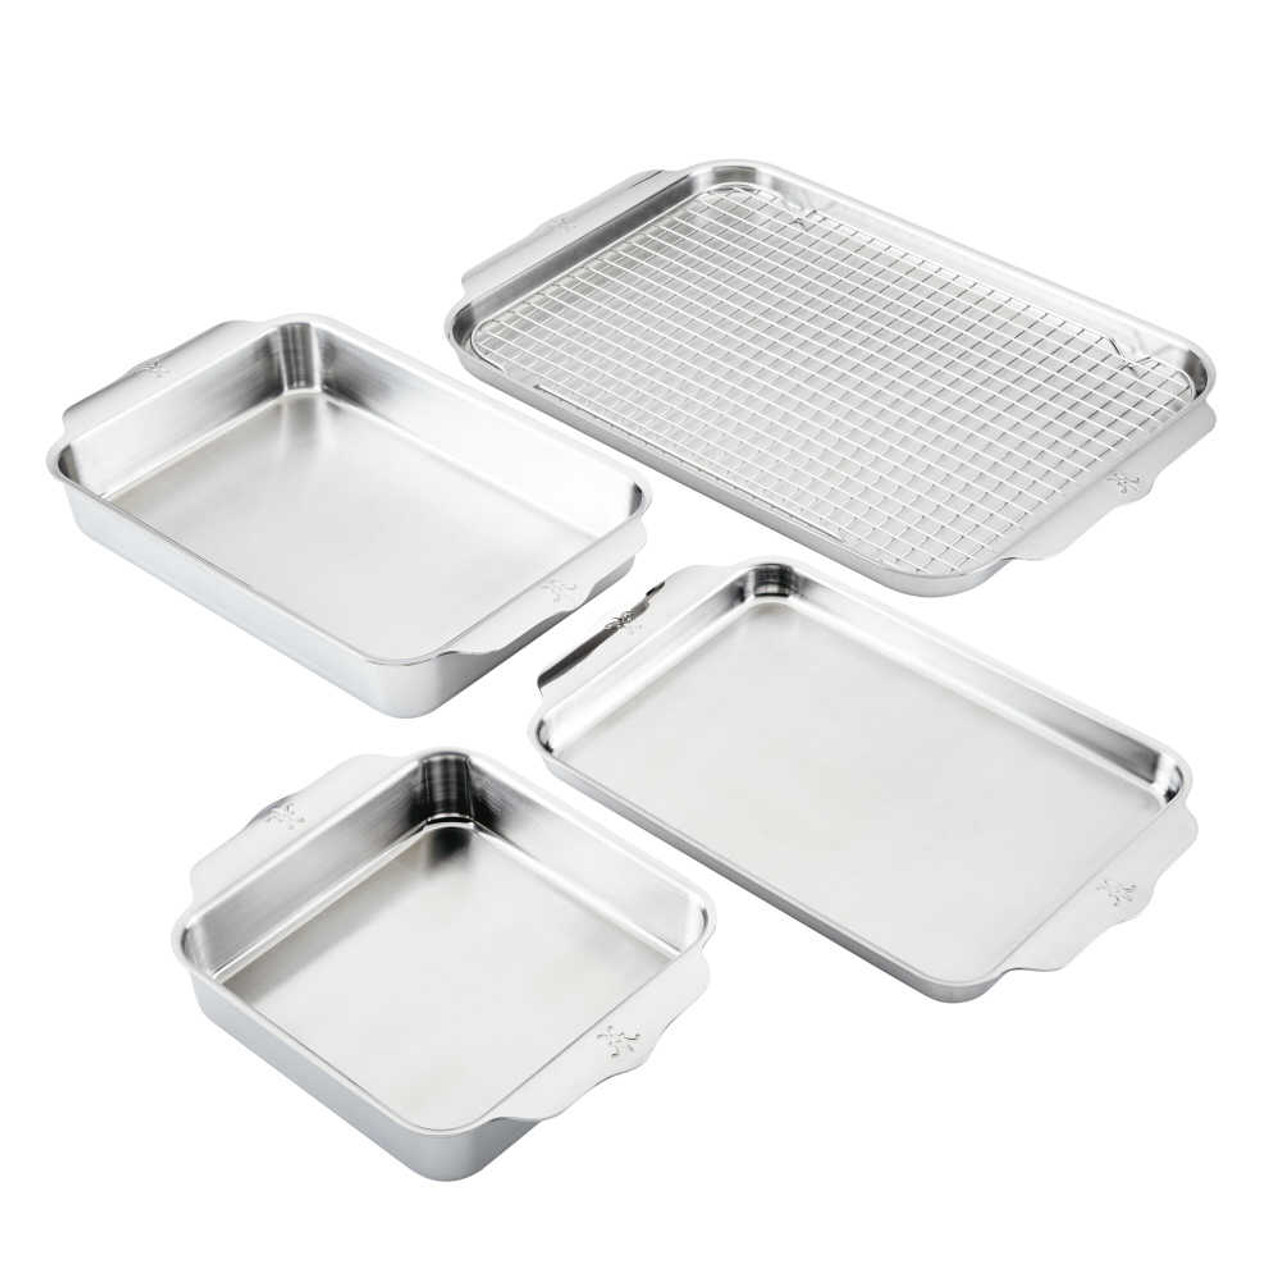 OvenBond Tri-ply 5-Piece Set – Hestan Culinary